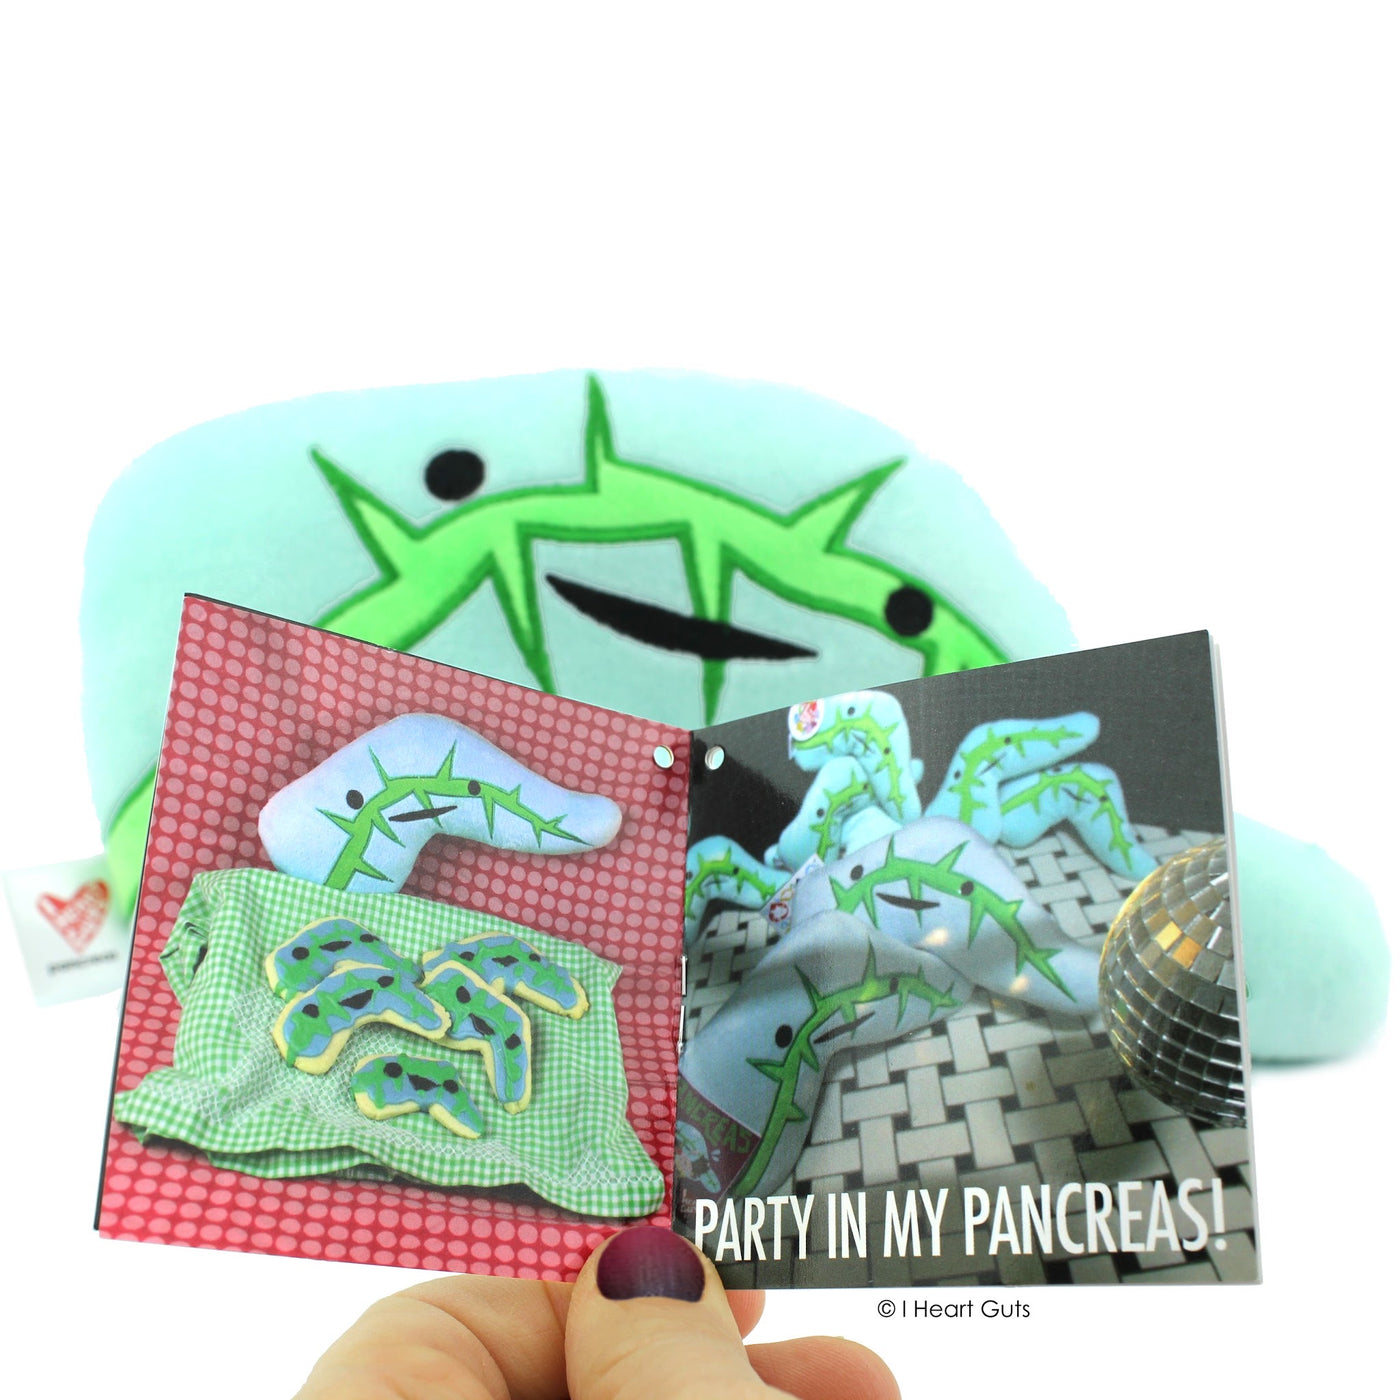 Pancreas Plush - Sweet on You - Plush Organ Stuffed Toy Pillow - I Heart Guts